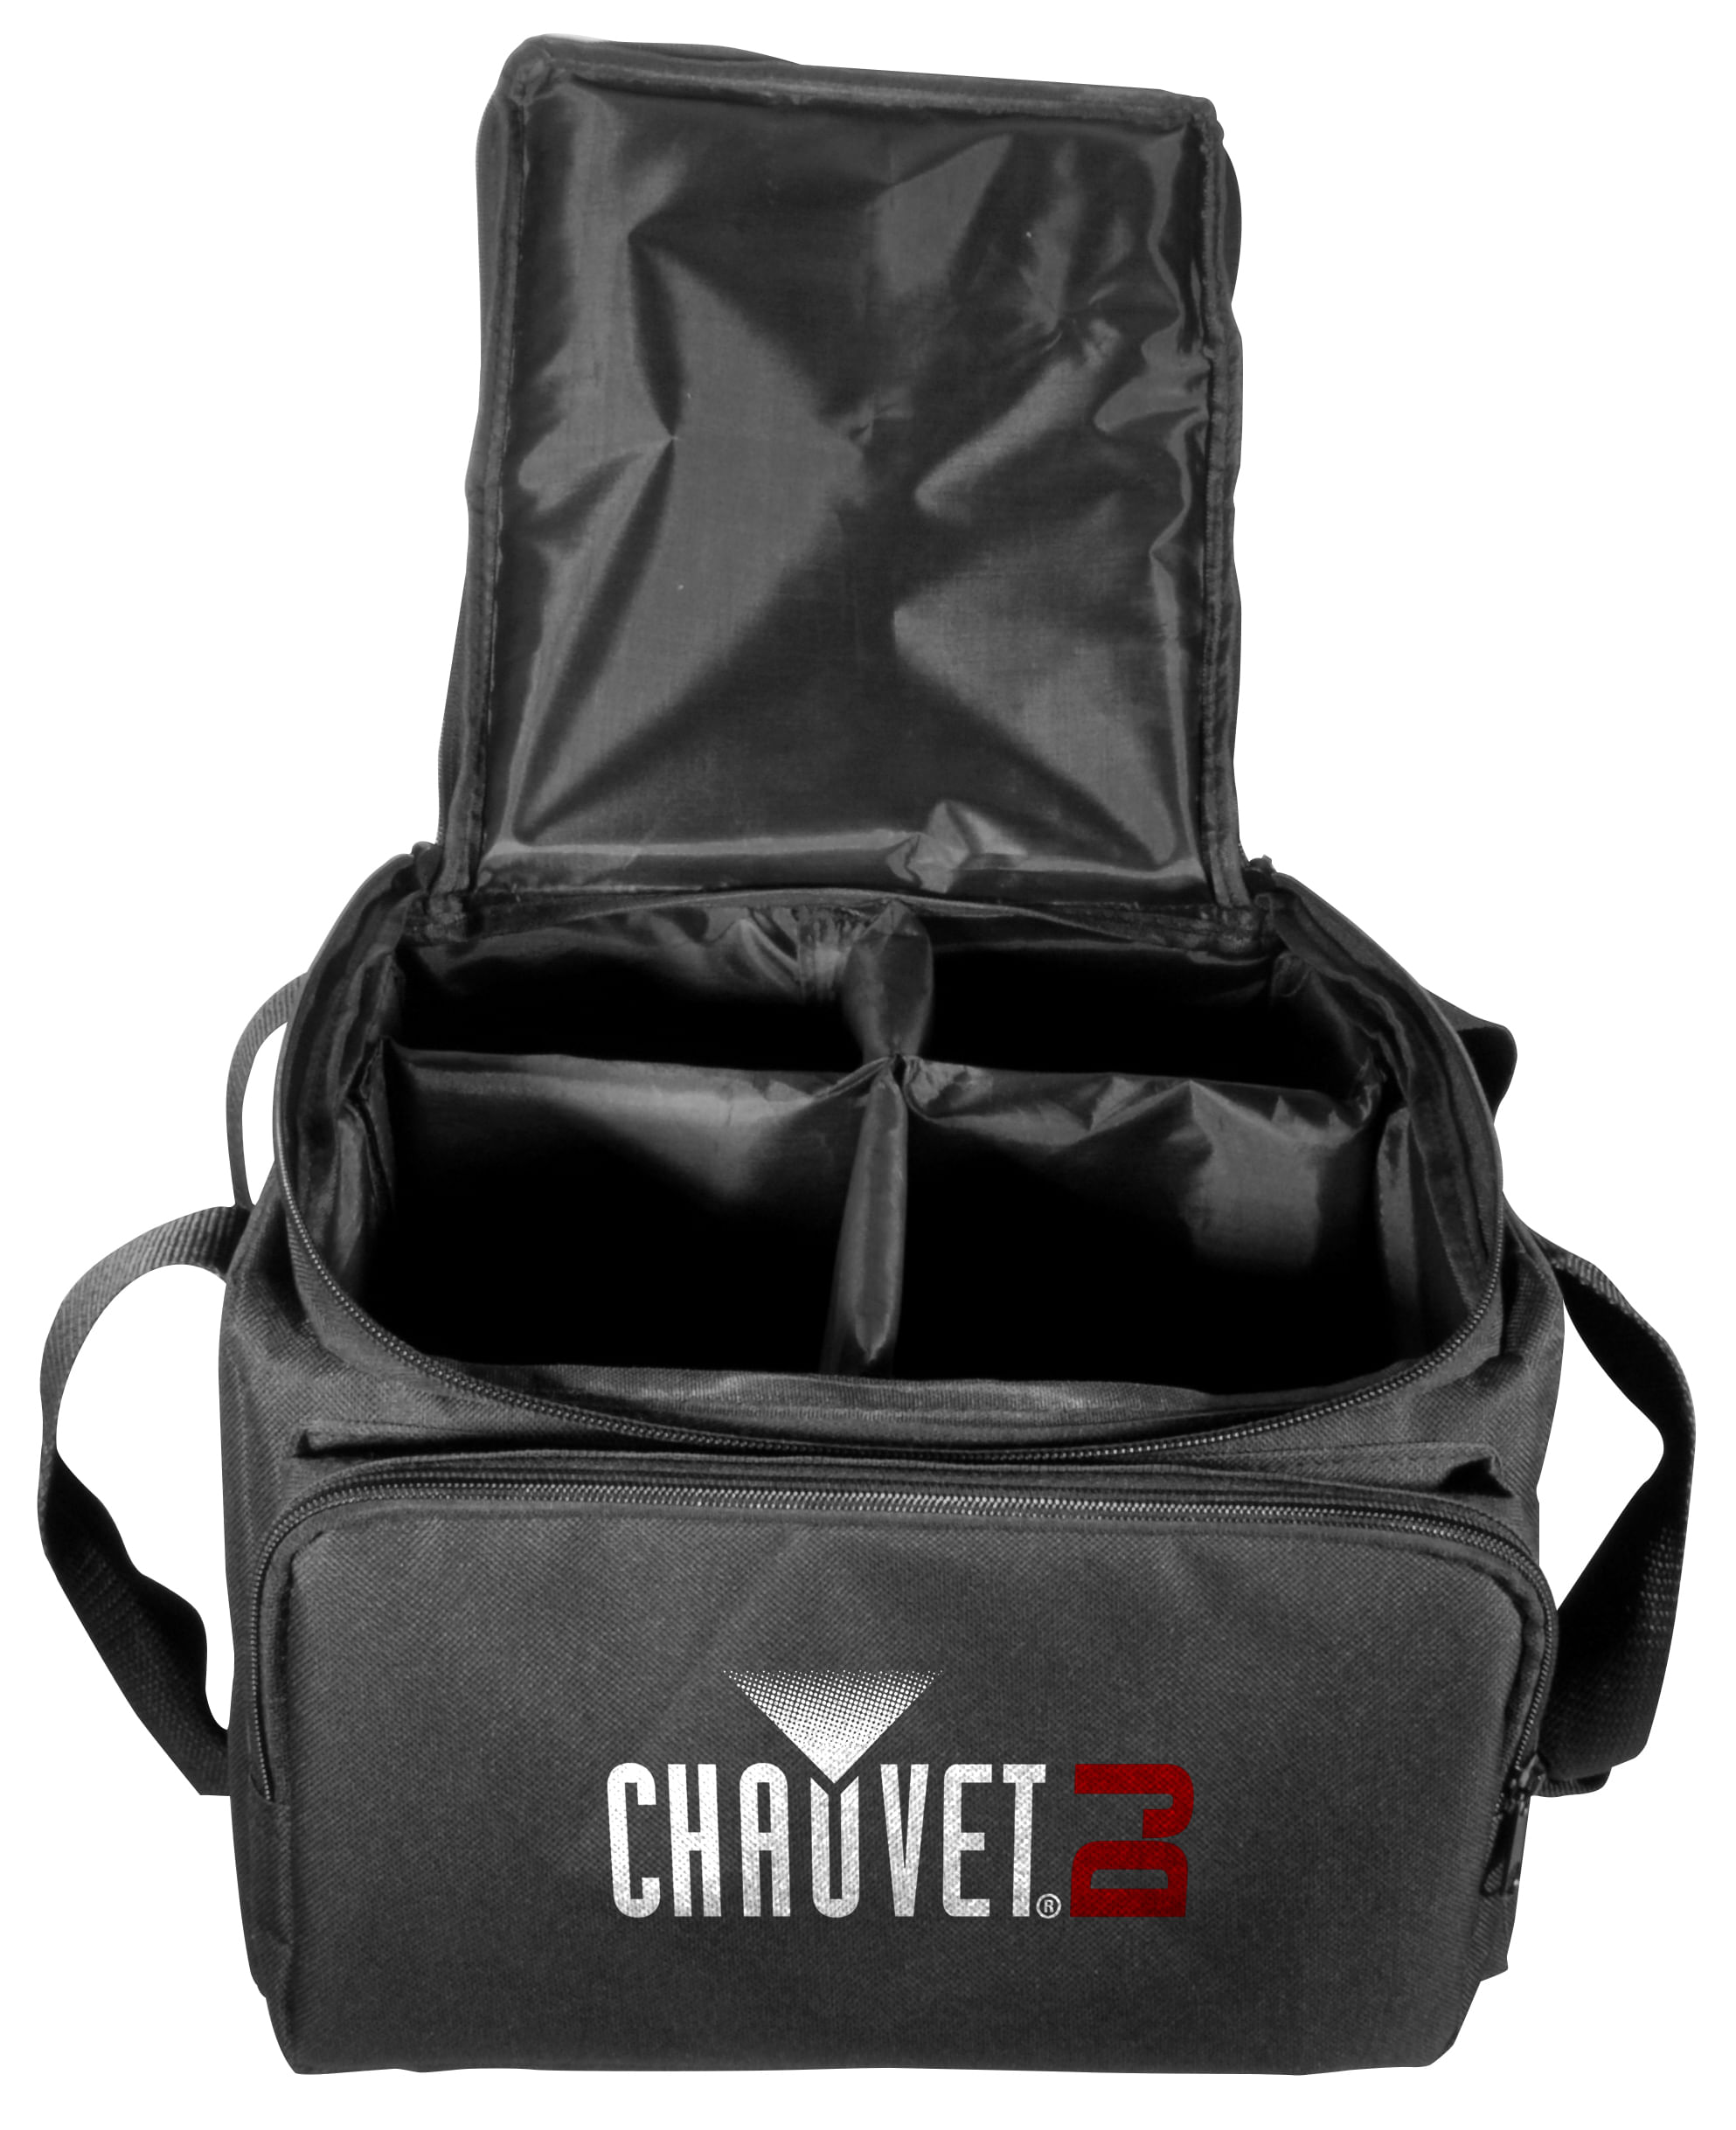 View larger image of Chauvet CHS-FR4 VIP Gear Bag